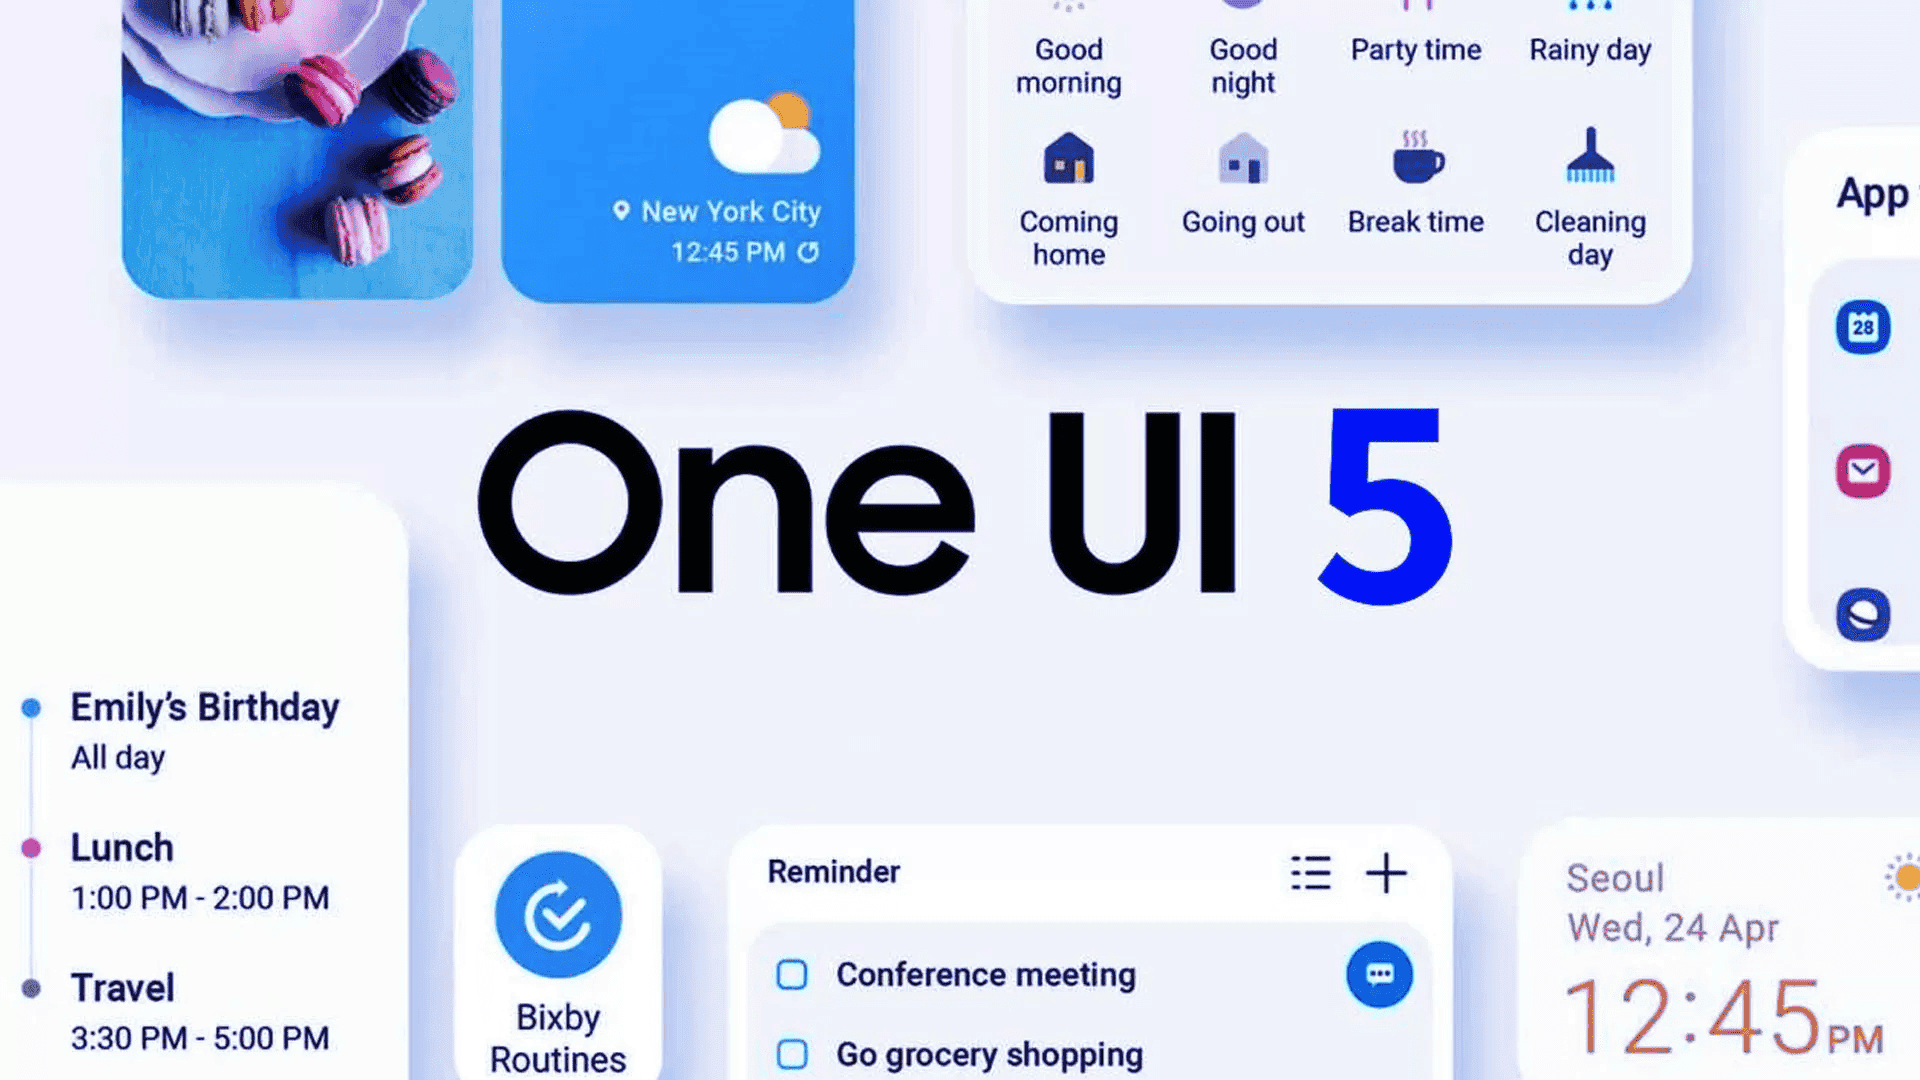 One UI 5